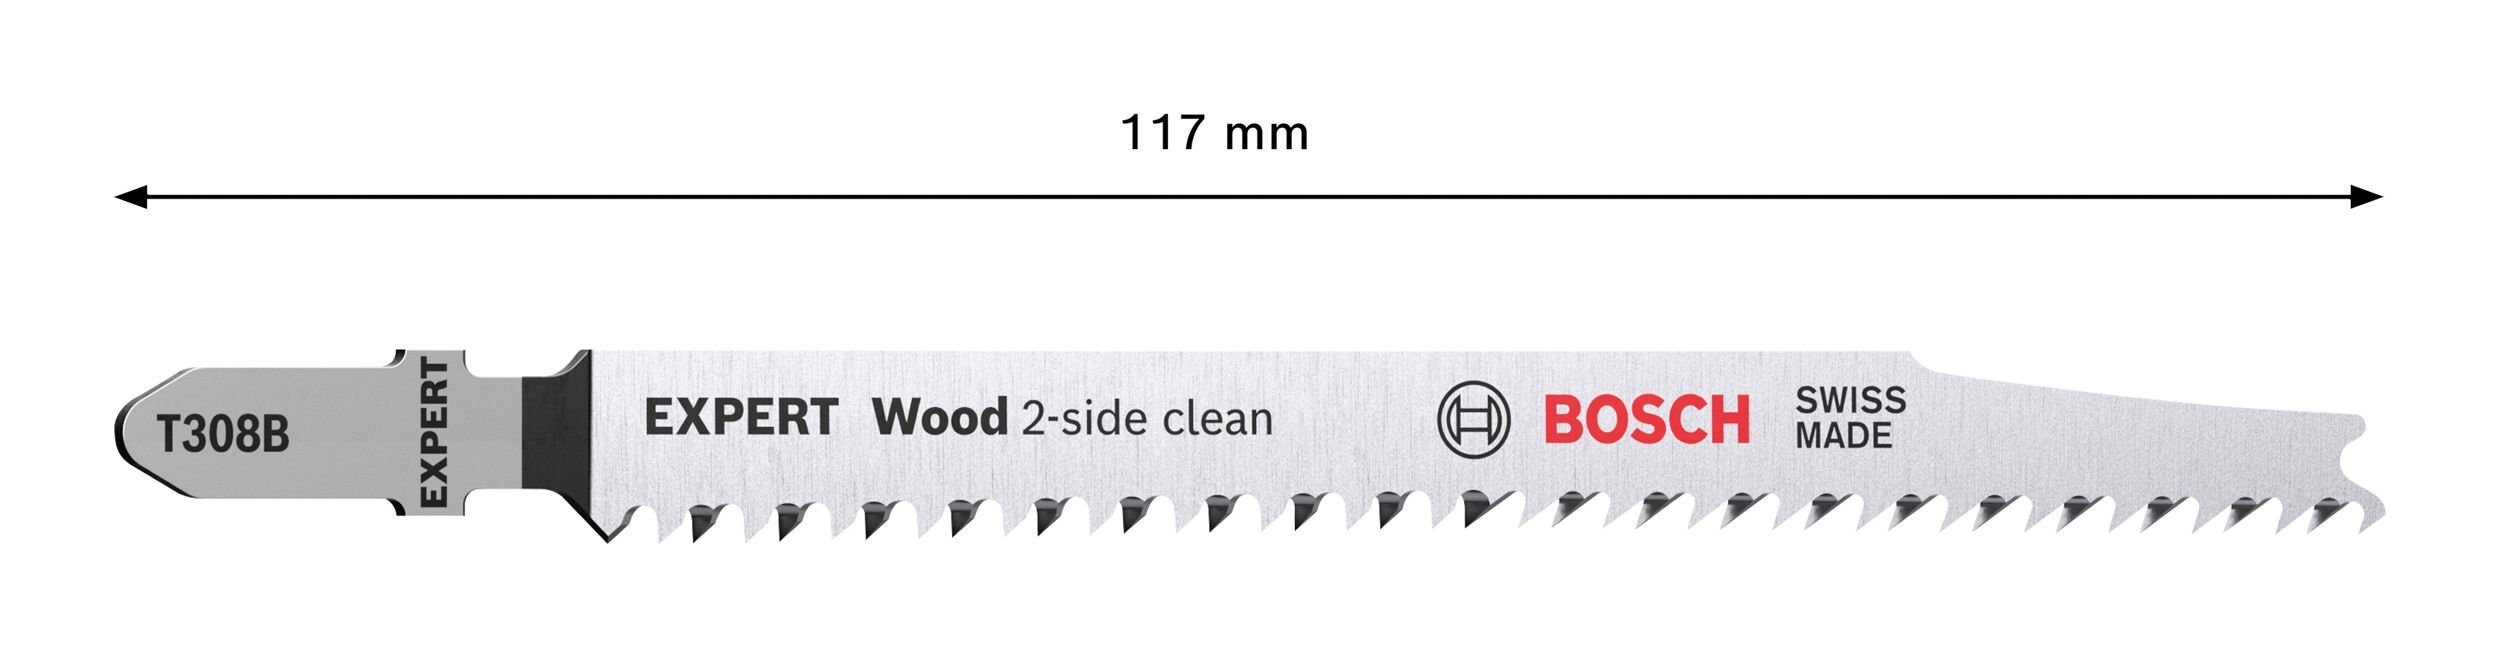 Stichsägen Expert Stück B, 100 2-side BOSCH für "Wood 308 Wood 2-side, Expert clean" T Stichsägeblatt